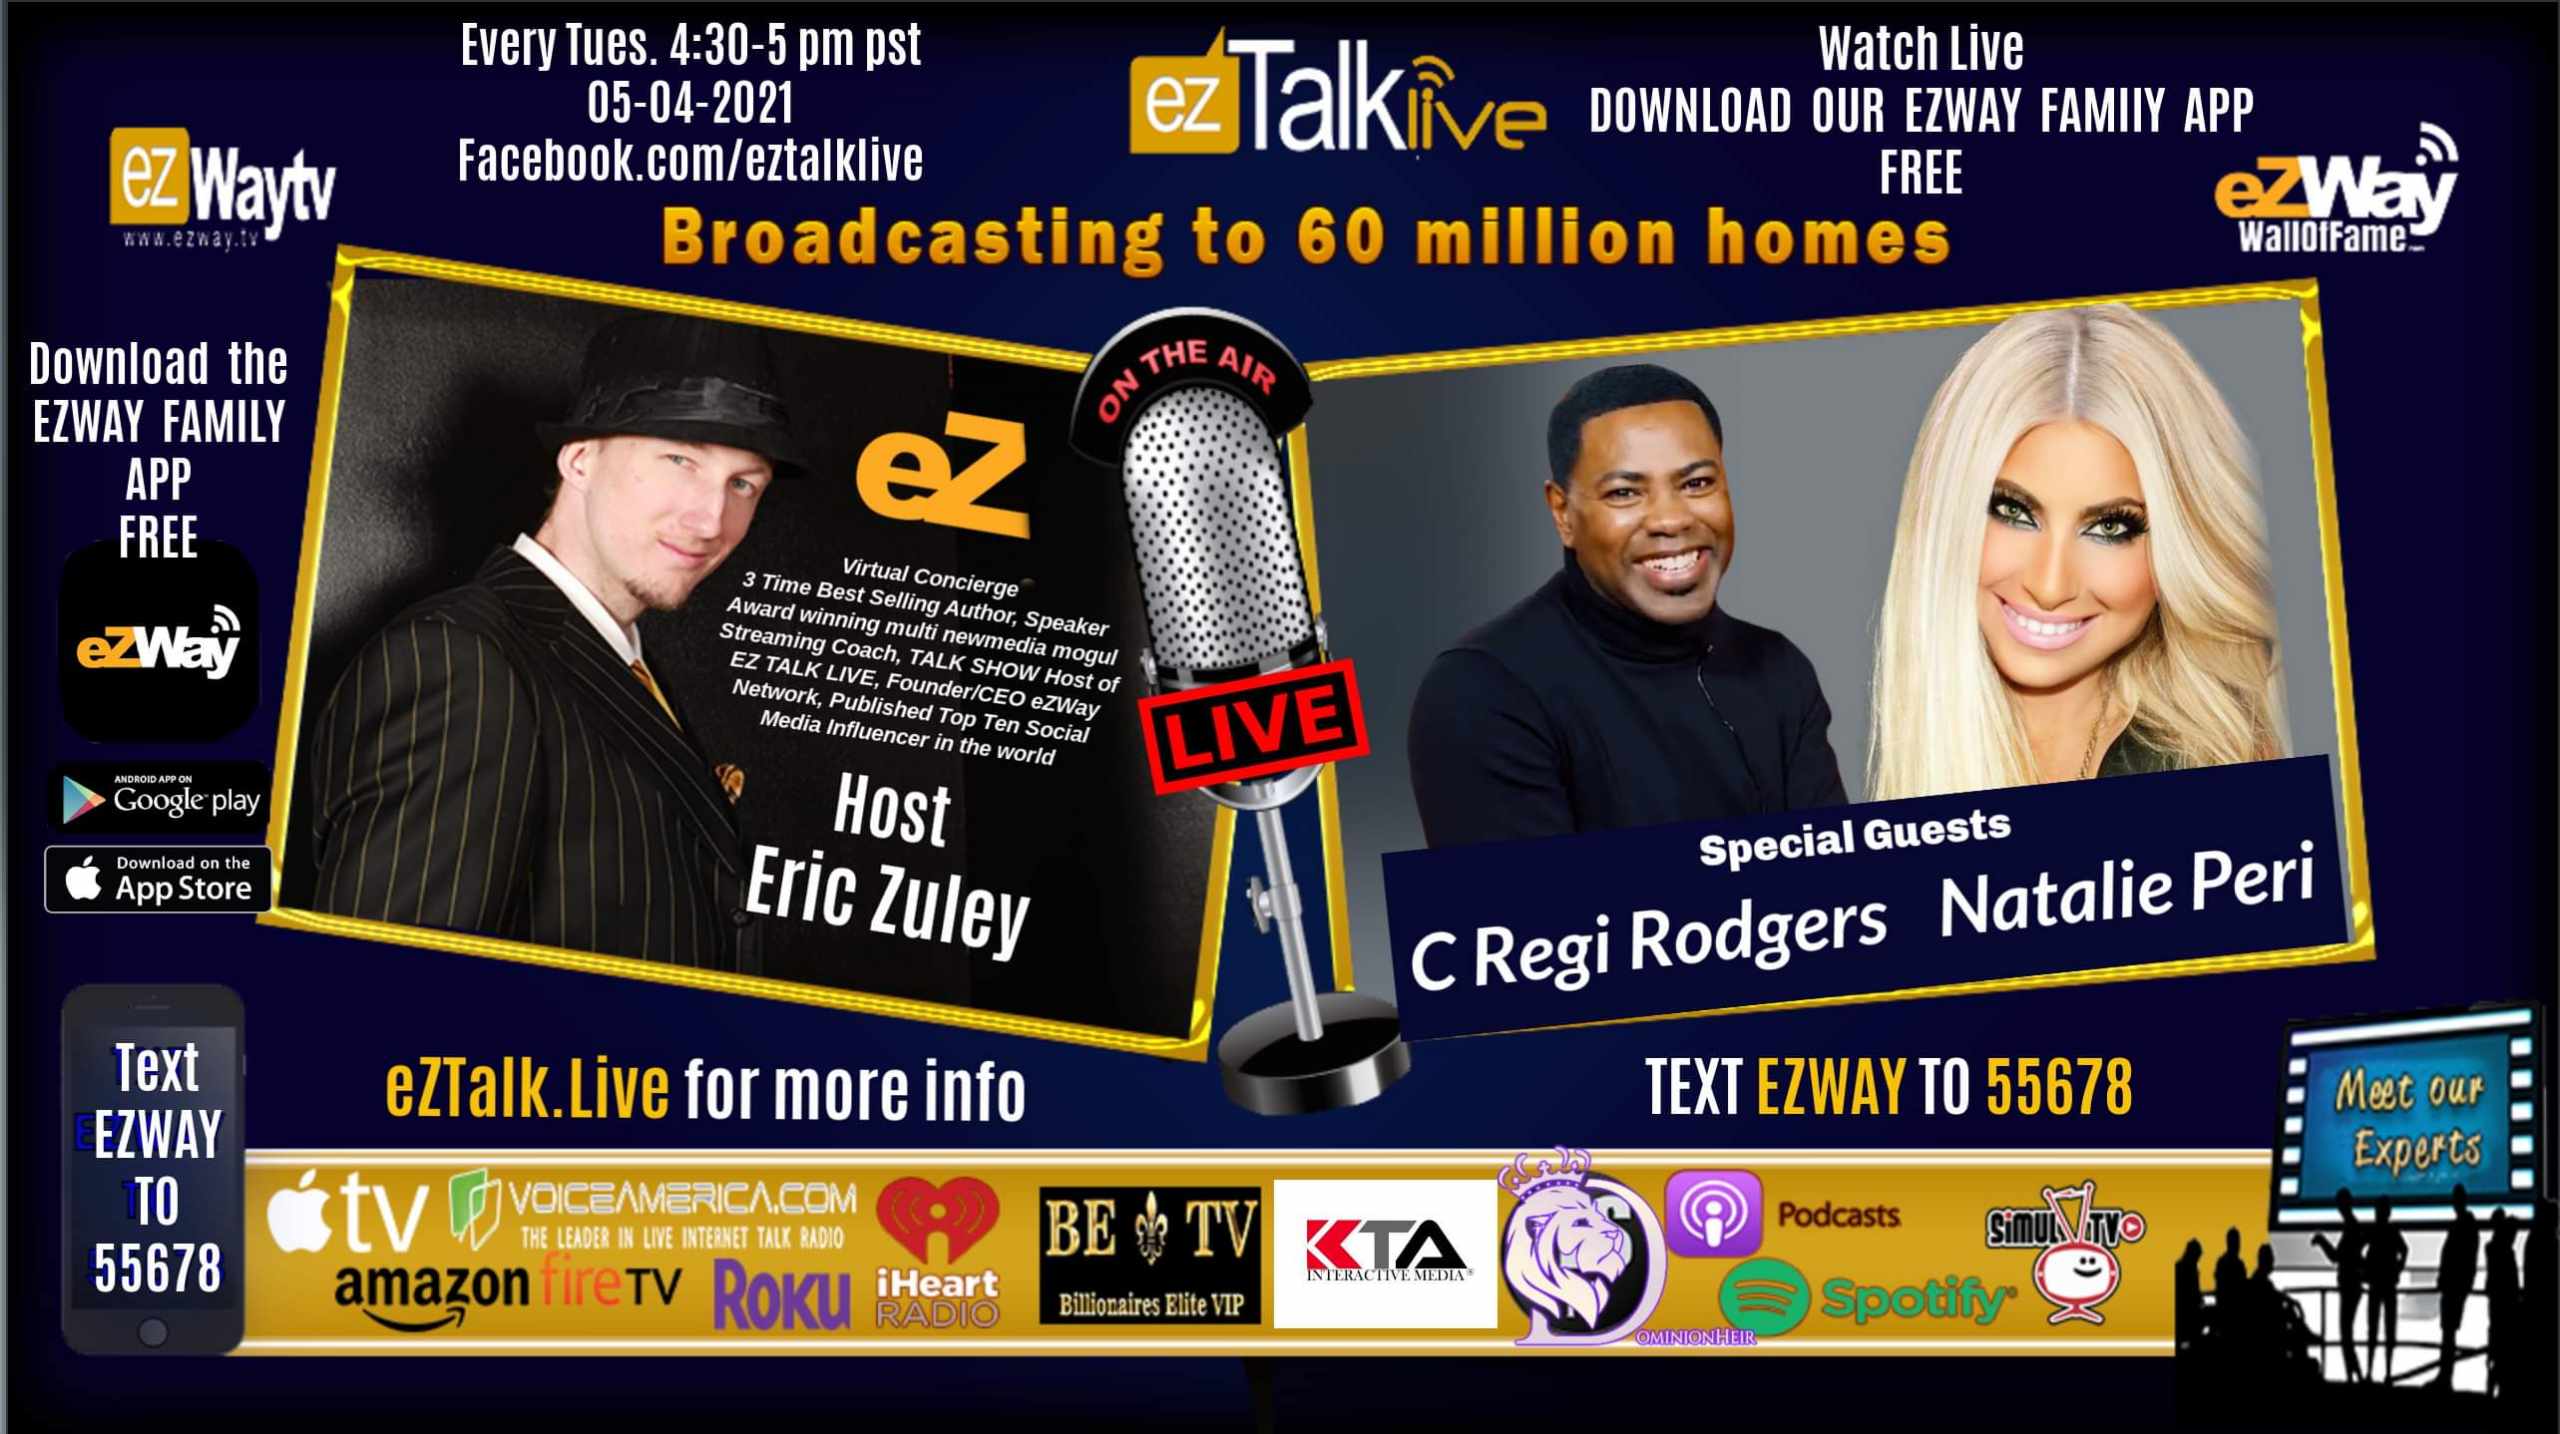 EZ TALK LIVE with Eric Zuley Feat. C Regi Rodgers and Natalie Peri